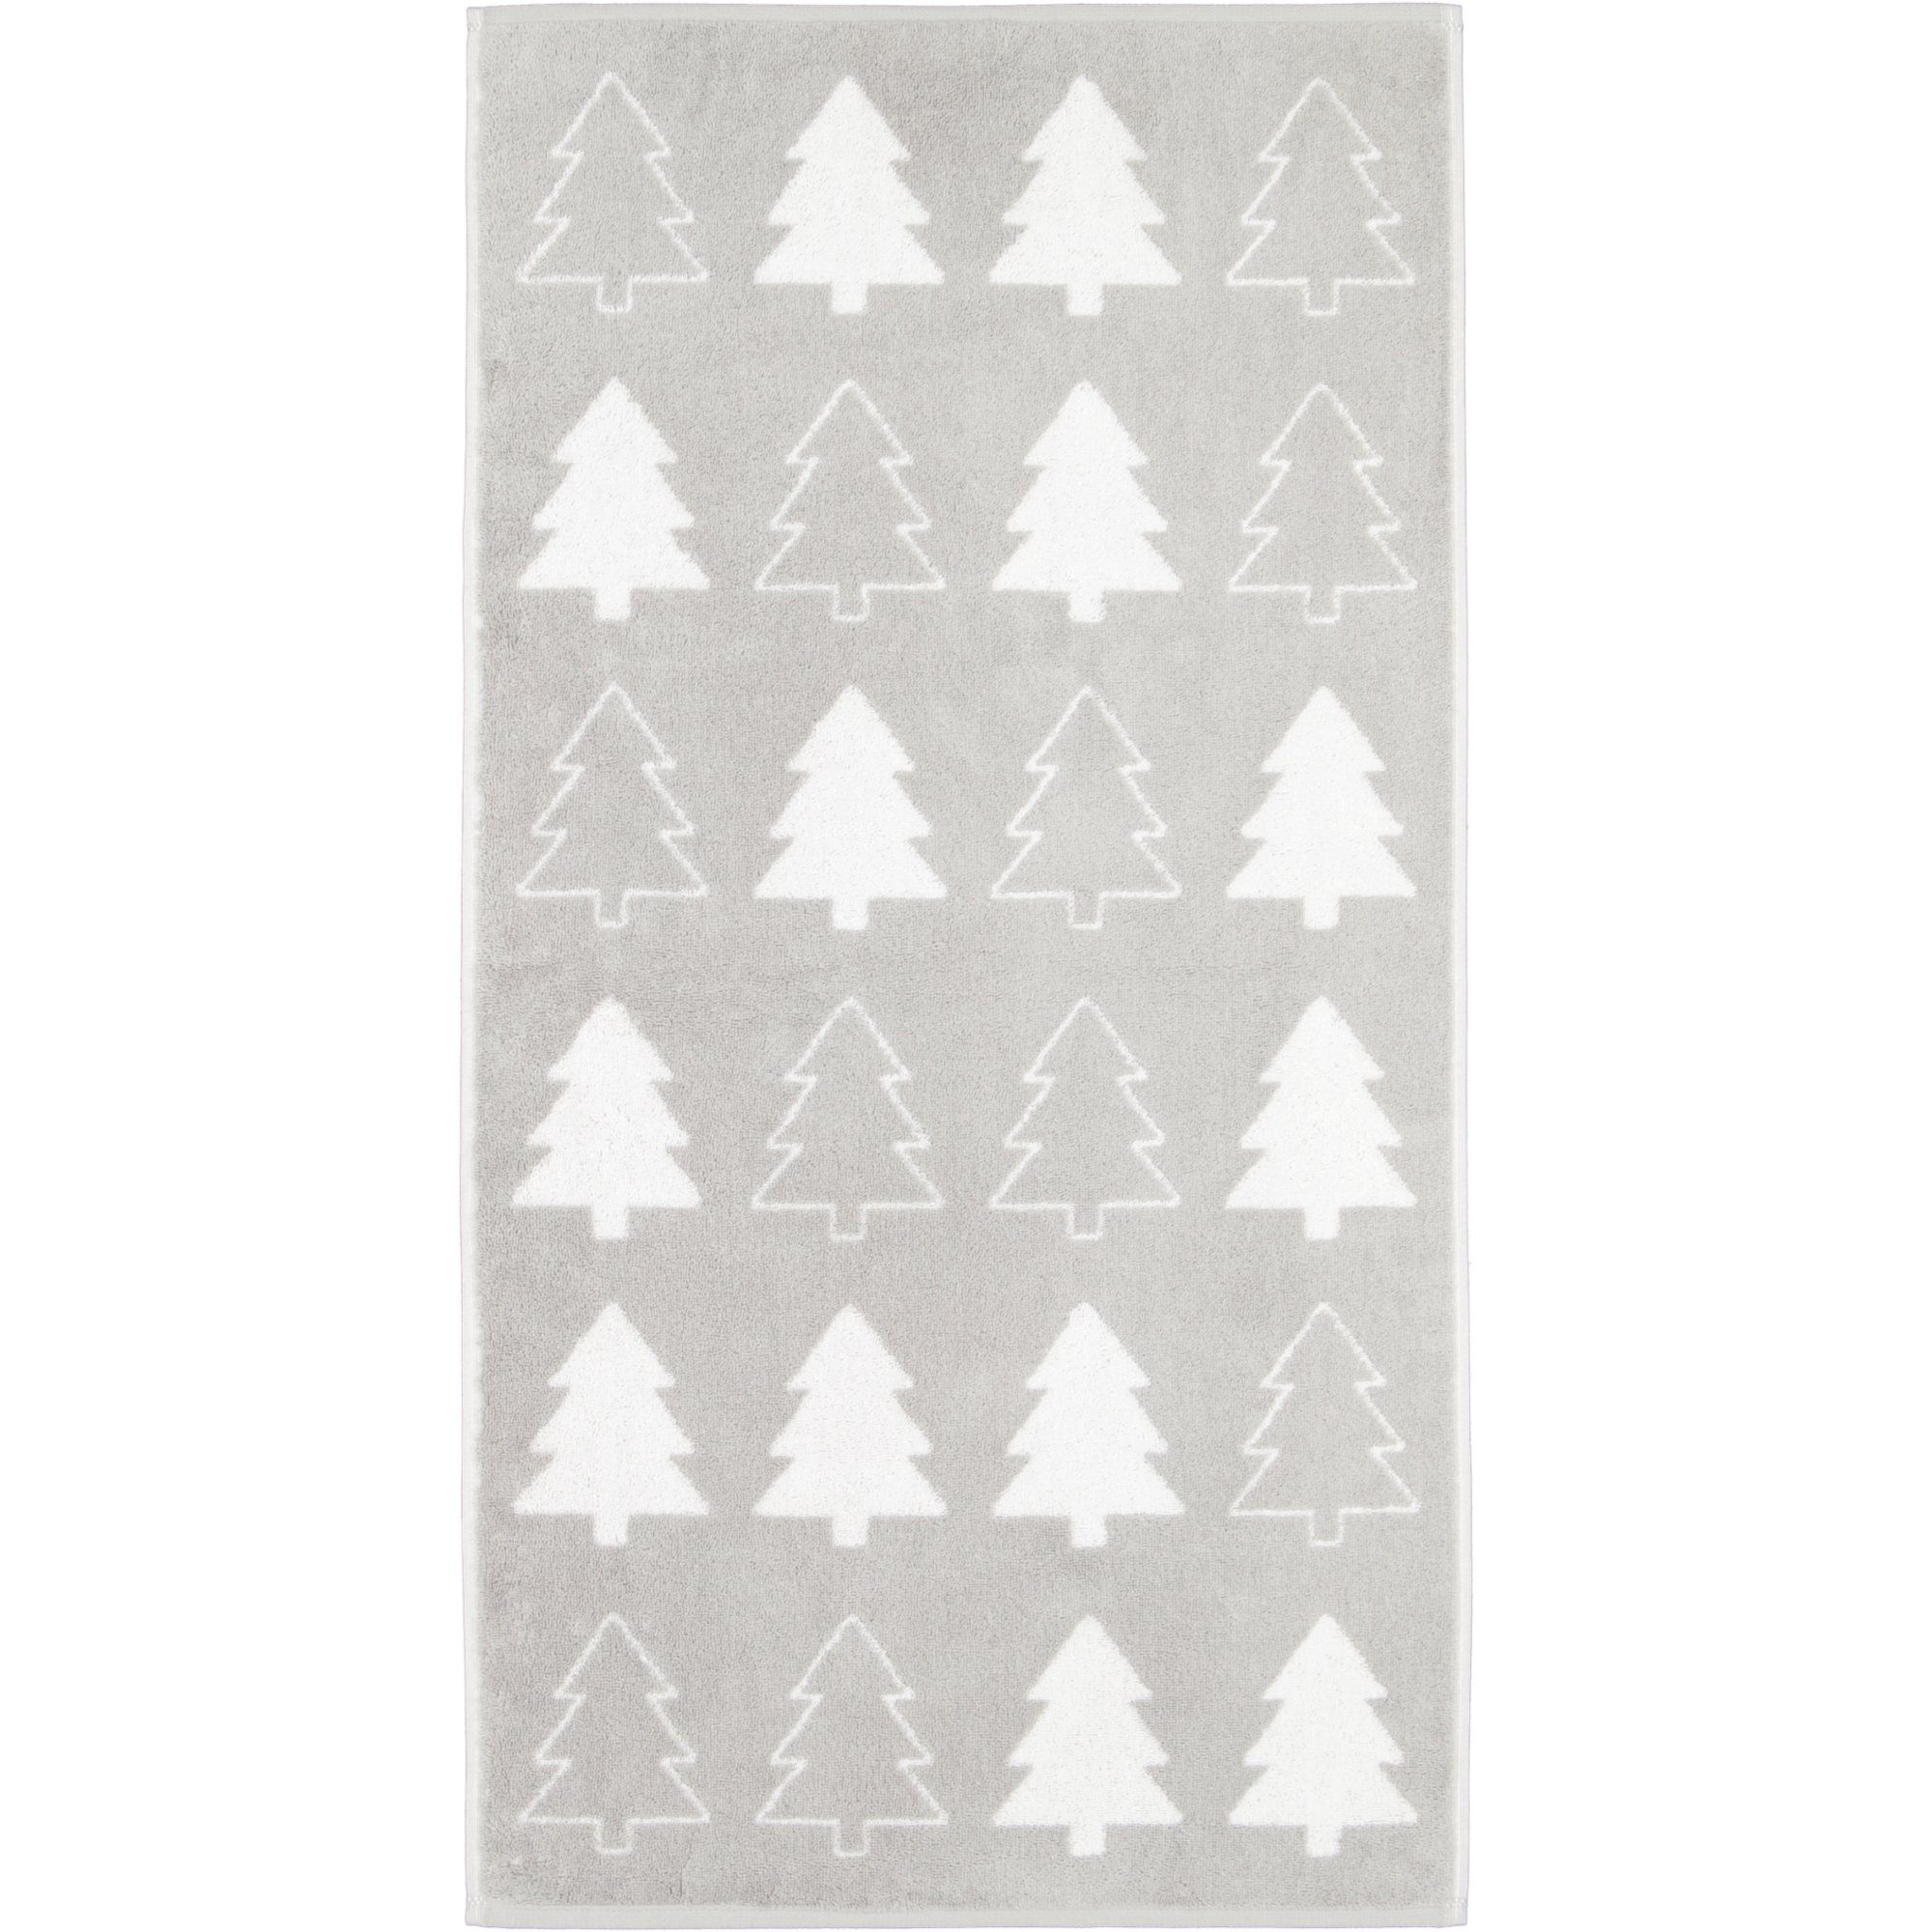 Cawö Handtücher Christmas Edition Tannenbäume Baumwolle 794, 100